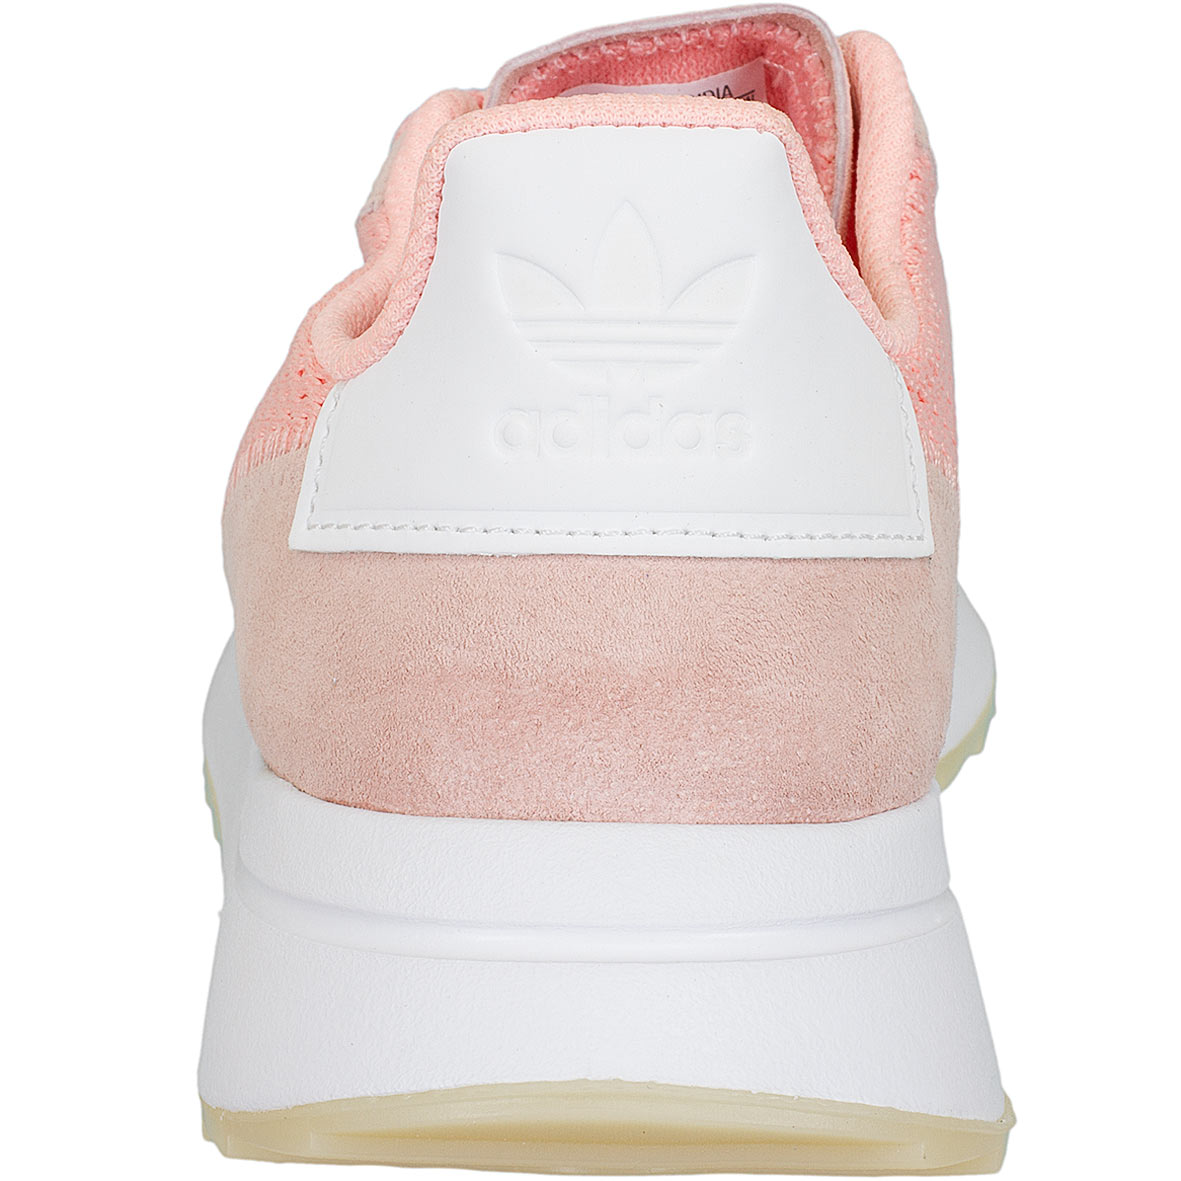 ☆ Adidas Originals Damen Sneaker Flashback pink/pink - hier bestellen!